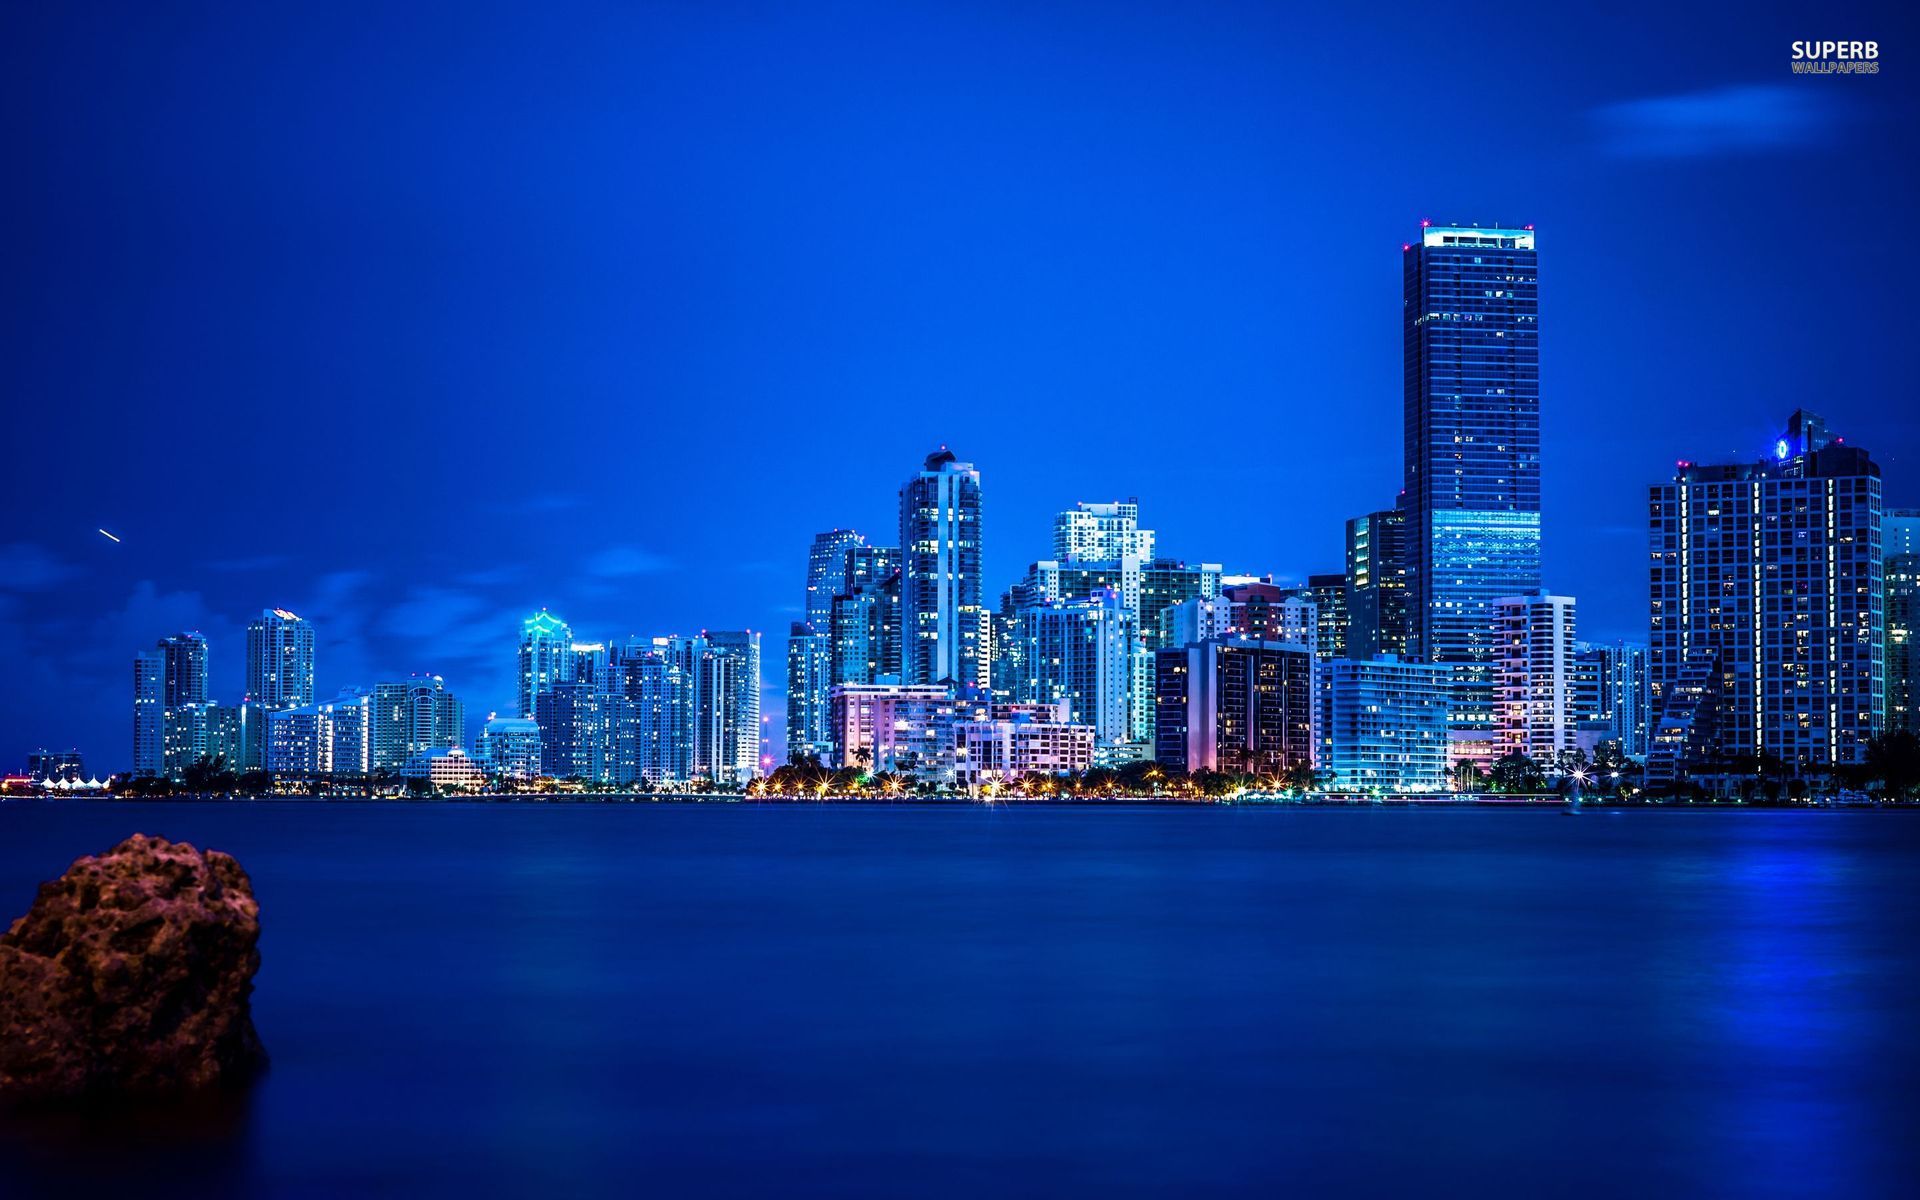 Miami night skyline wallpaper 1920x1200 1920x1200